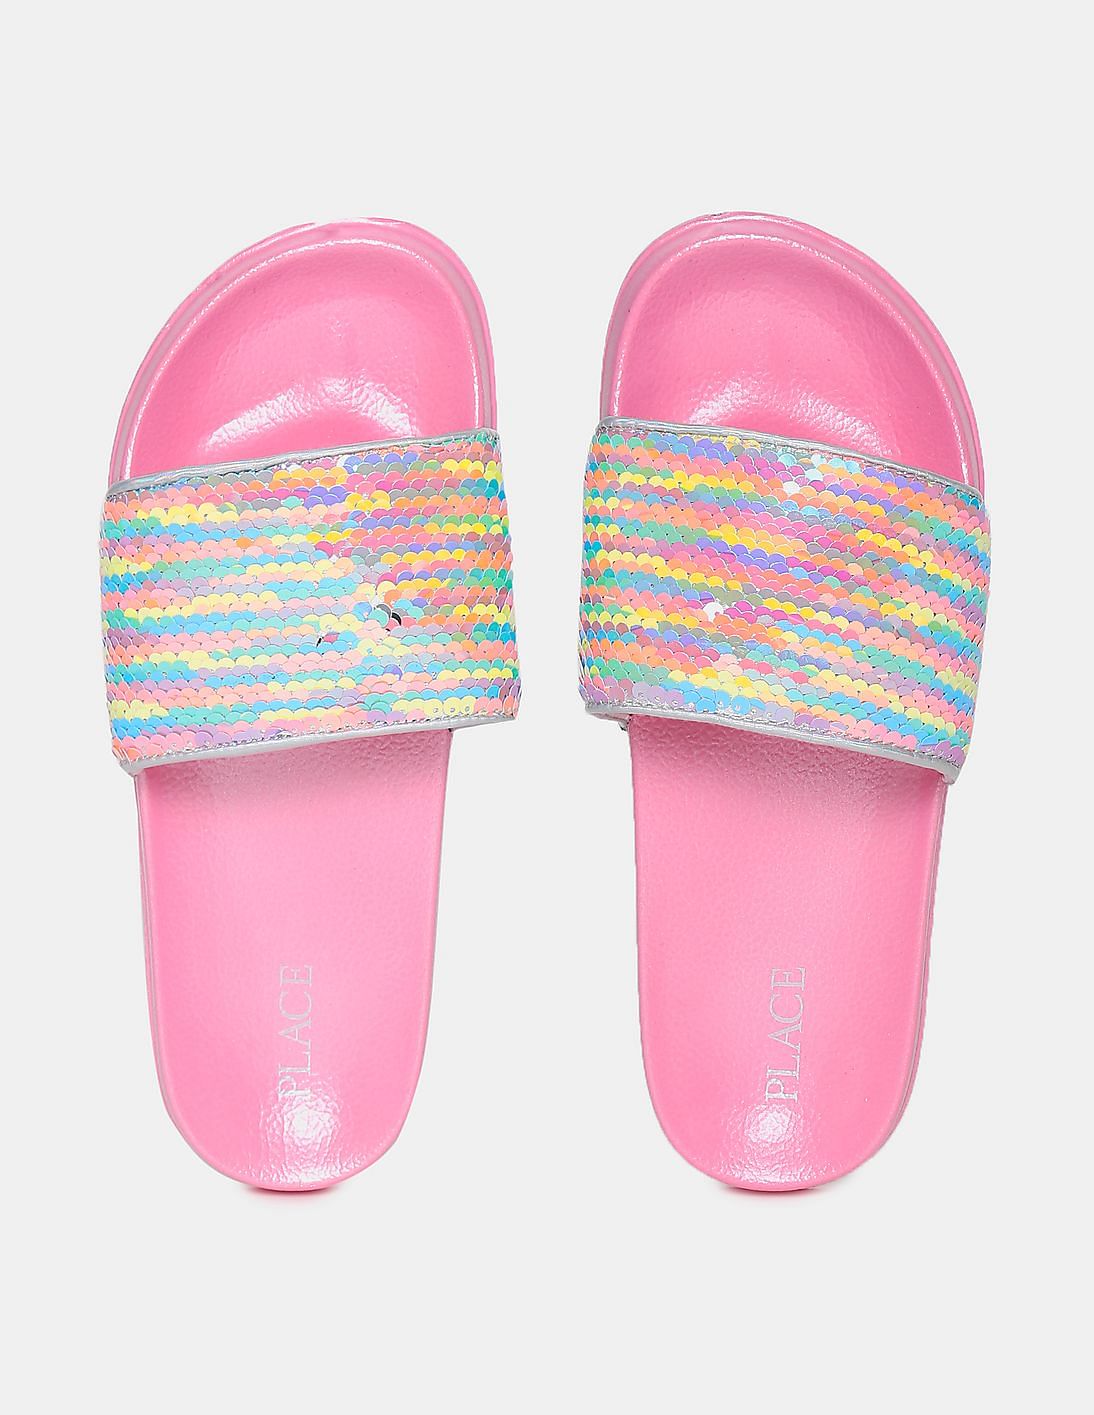 girls pink slides